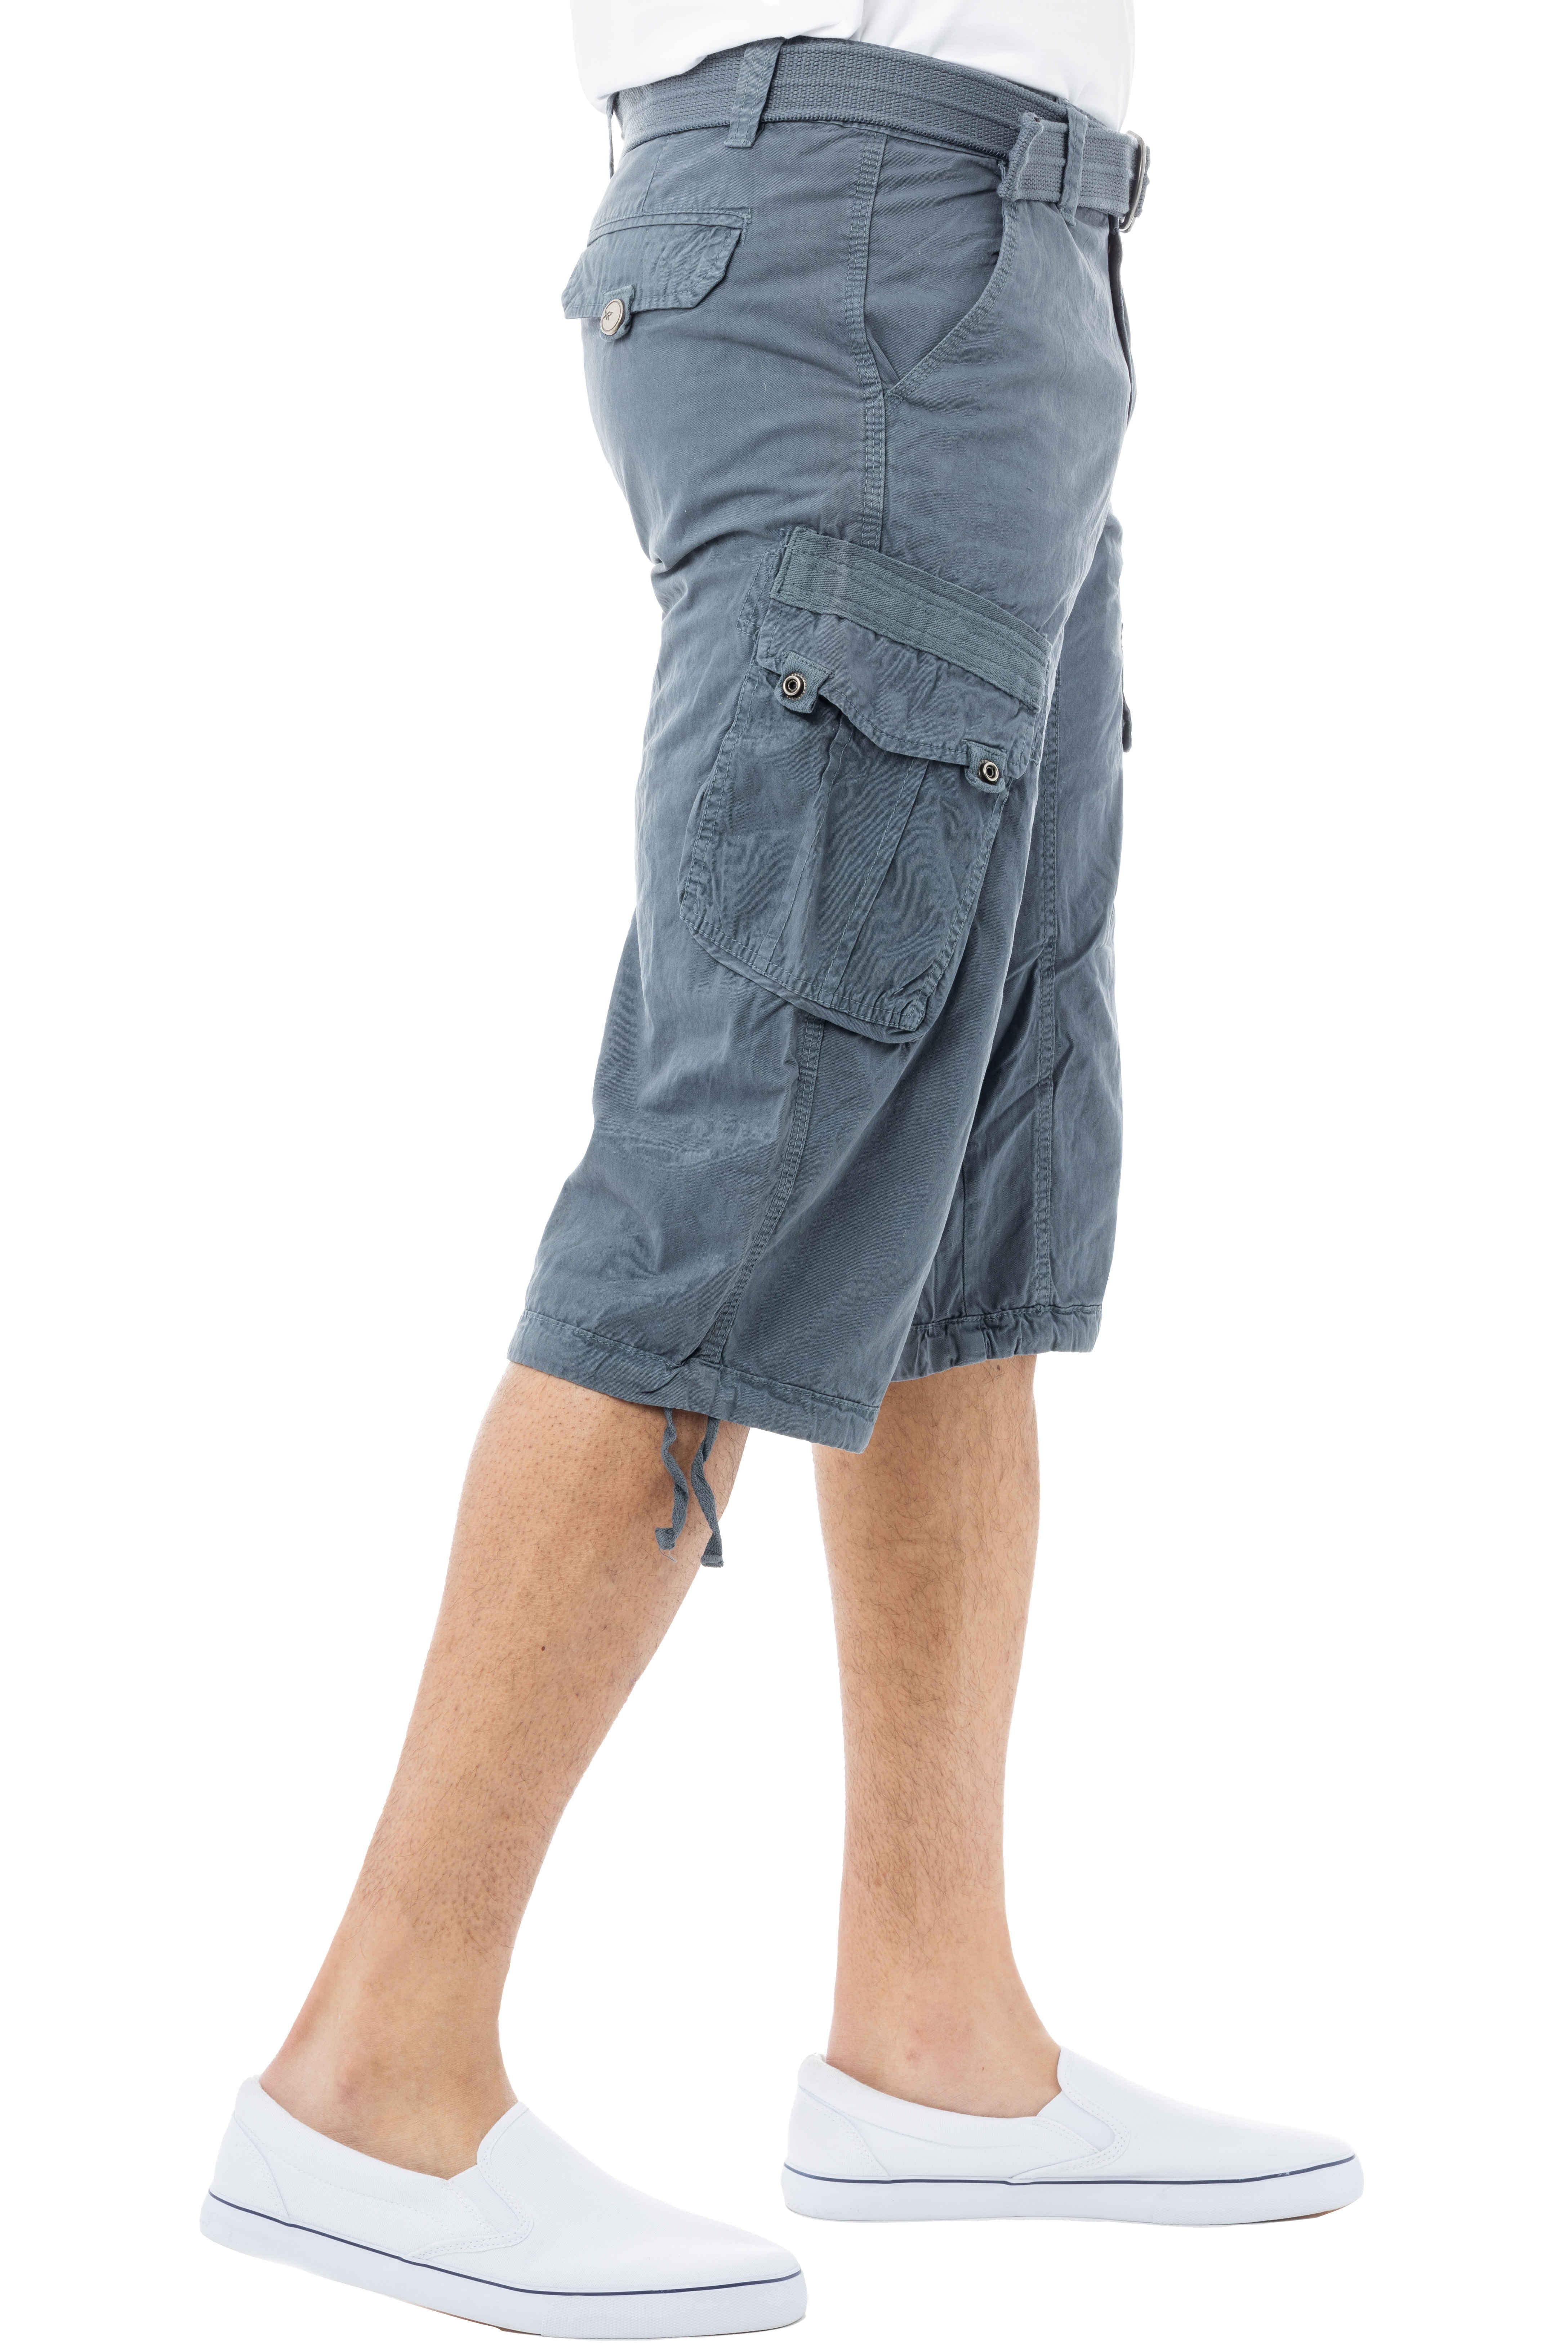 X RAY Men's Belted Cargo Long Shorts 18 Inseam Below Knee Length Multi  Pocket 3/4 Capri Pants Steel Size 28 